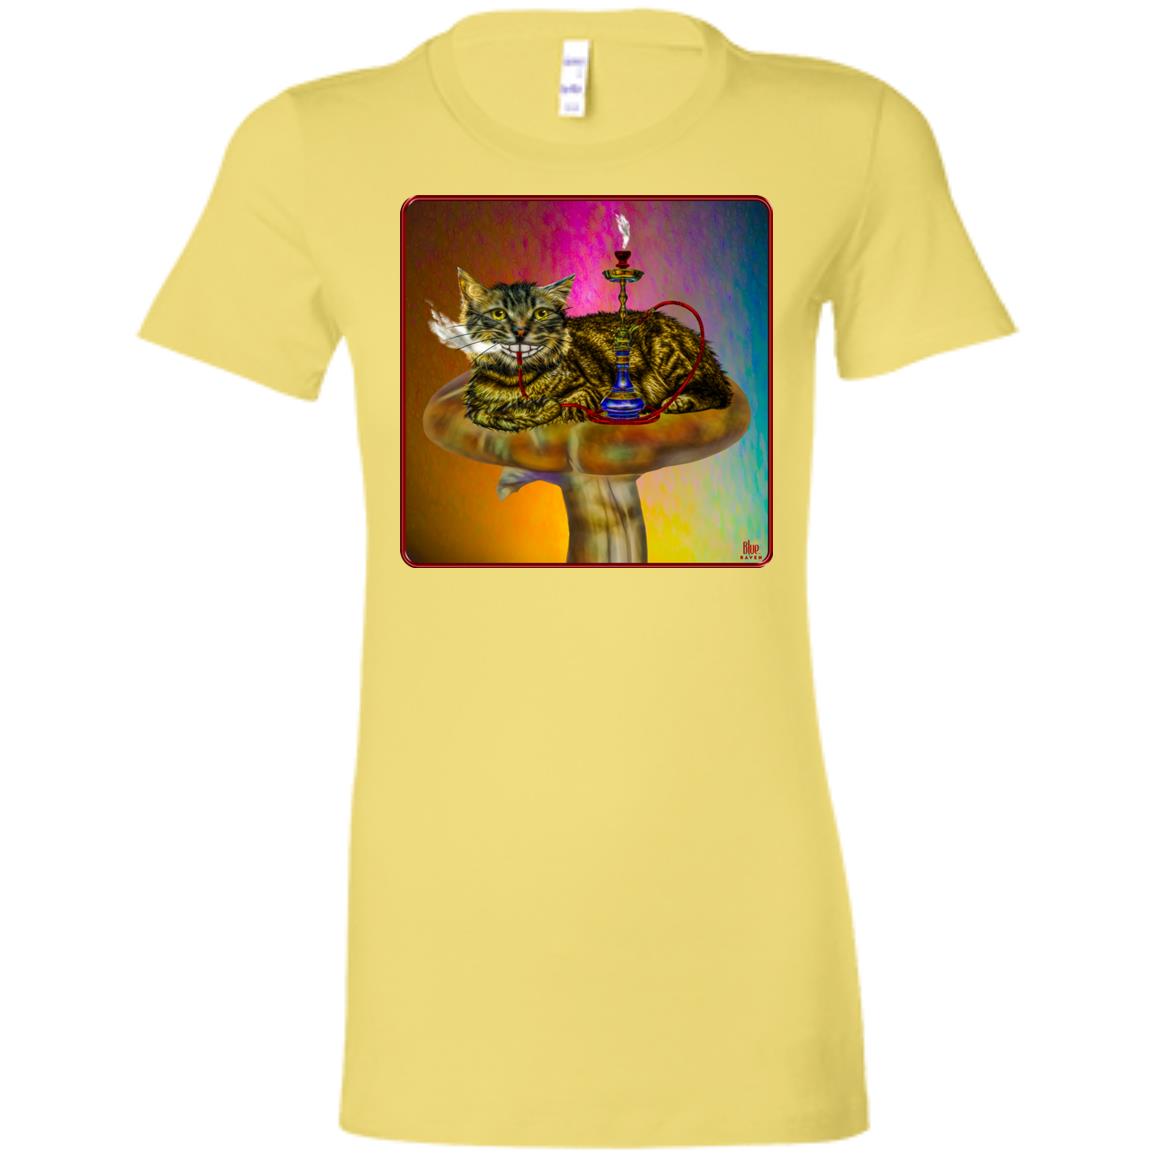 MAGIC MUSHROOM - Women's Fitted T-Shirt